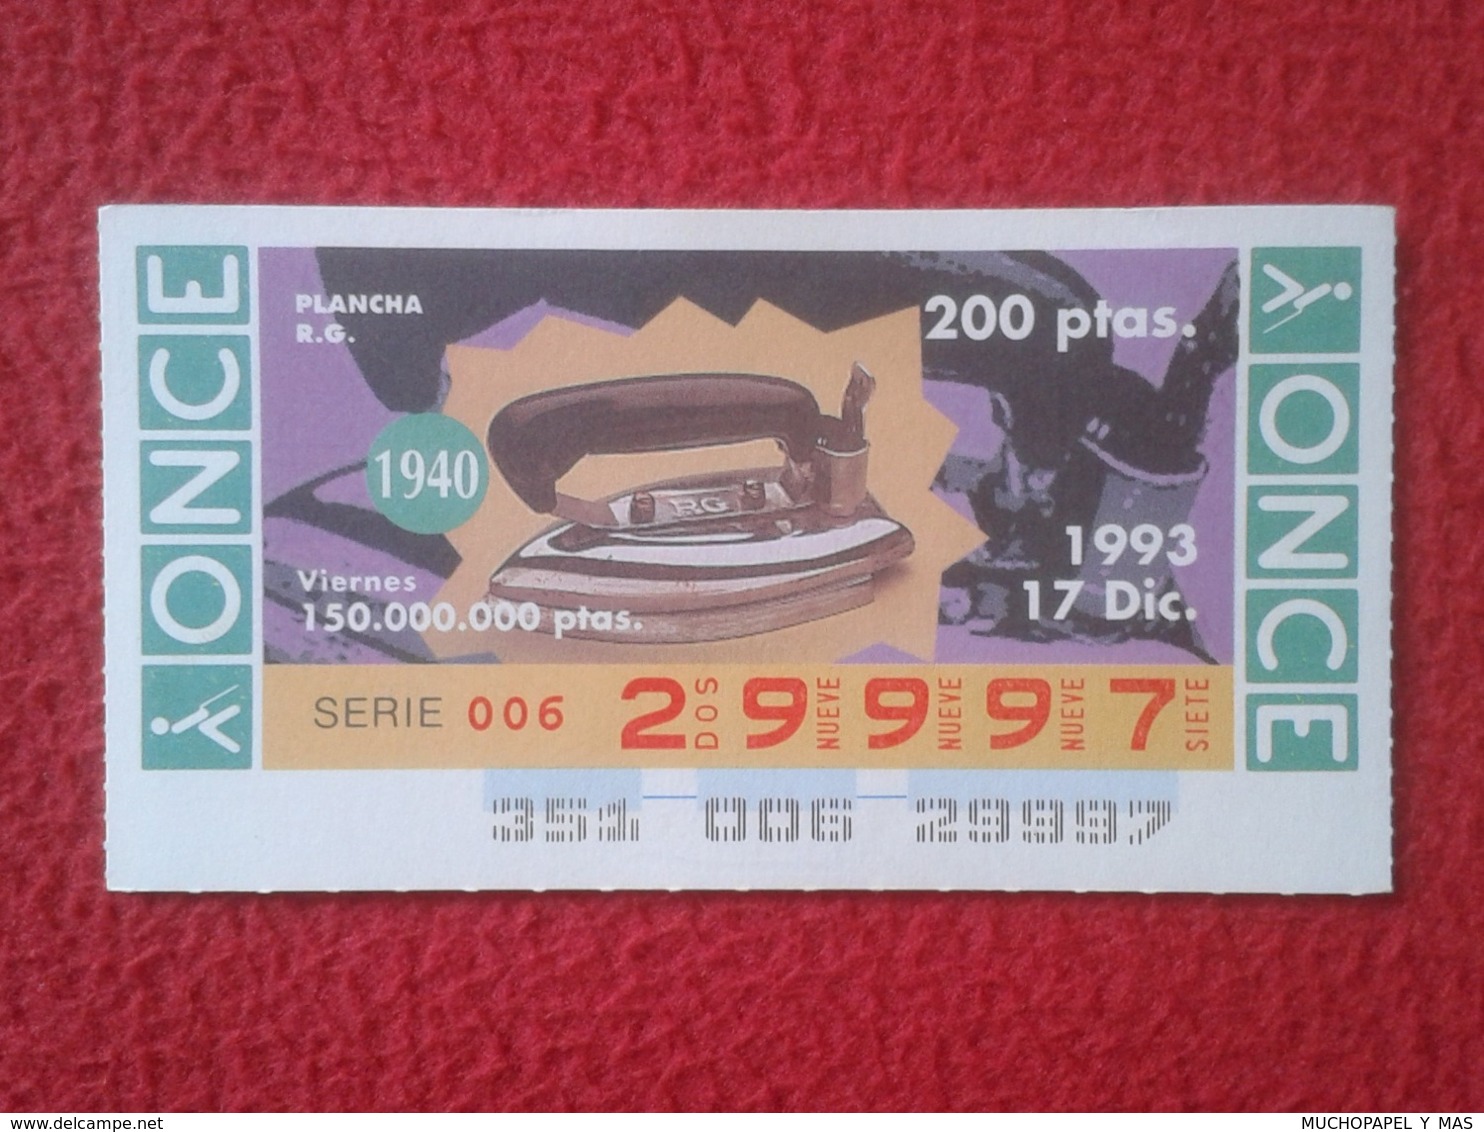 CUPÓN DE ONCE 1993 SPANISH LOTTERY LOTERIE SPAIN CIEGOS BLIND LOTERÍA PLANCHA MÁQUINA DE PLANCHAR R. G. CLOTHES IRON - Lotterielose